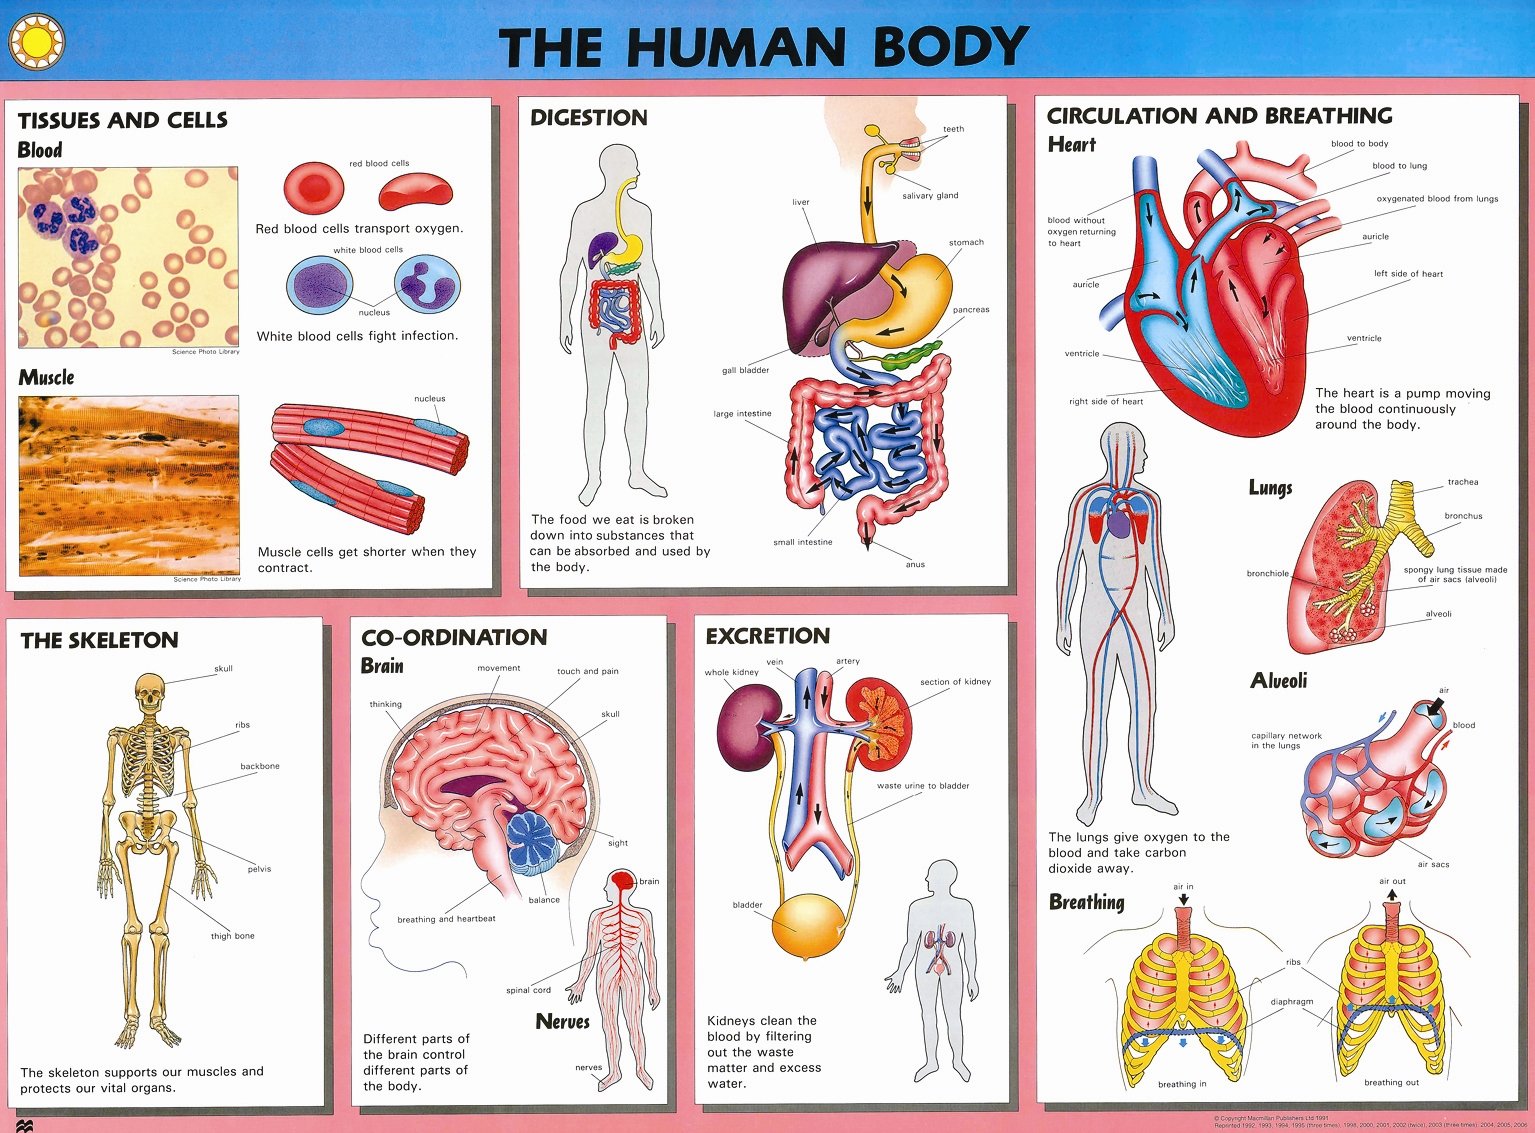 macmillan human biology wallcharts (human biology w/charts)